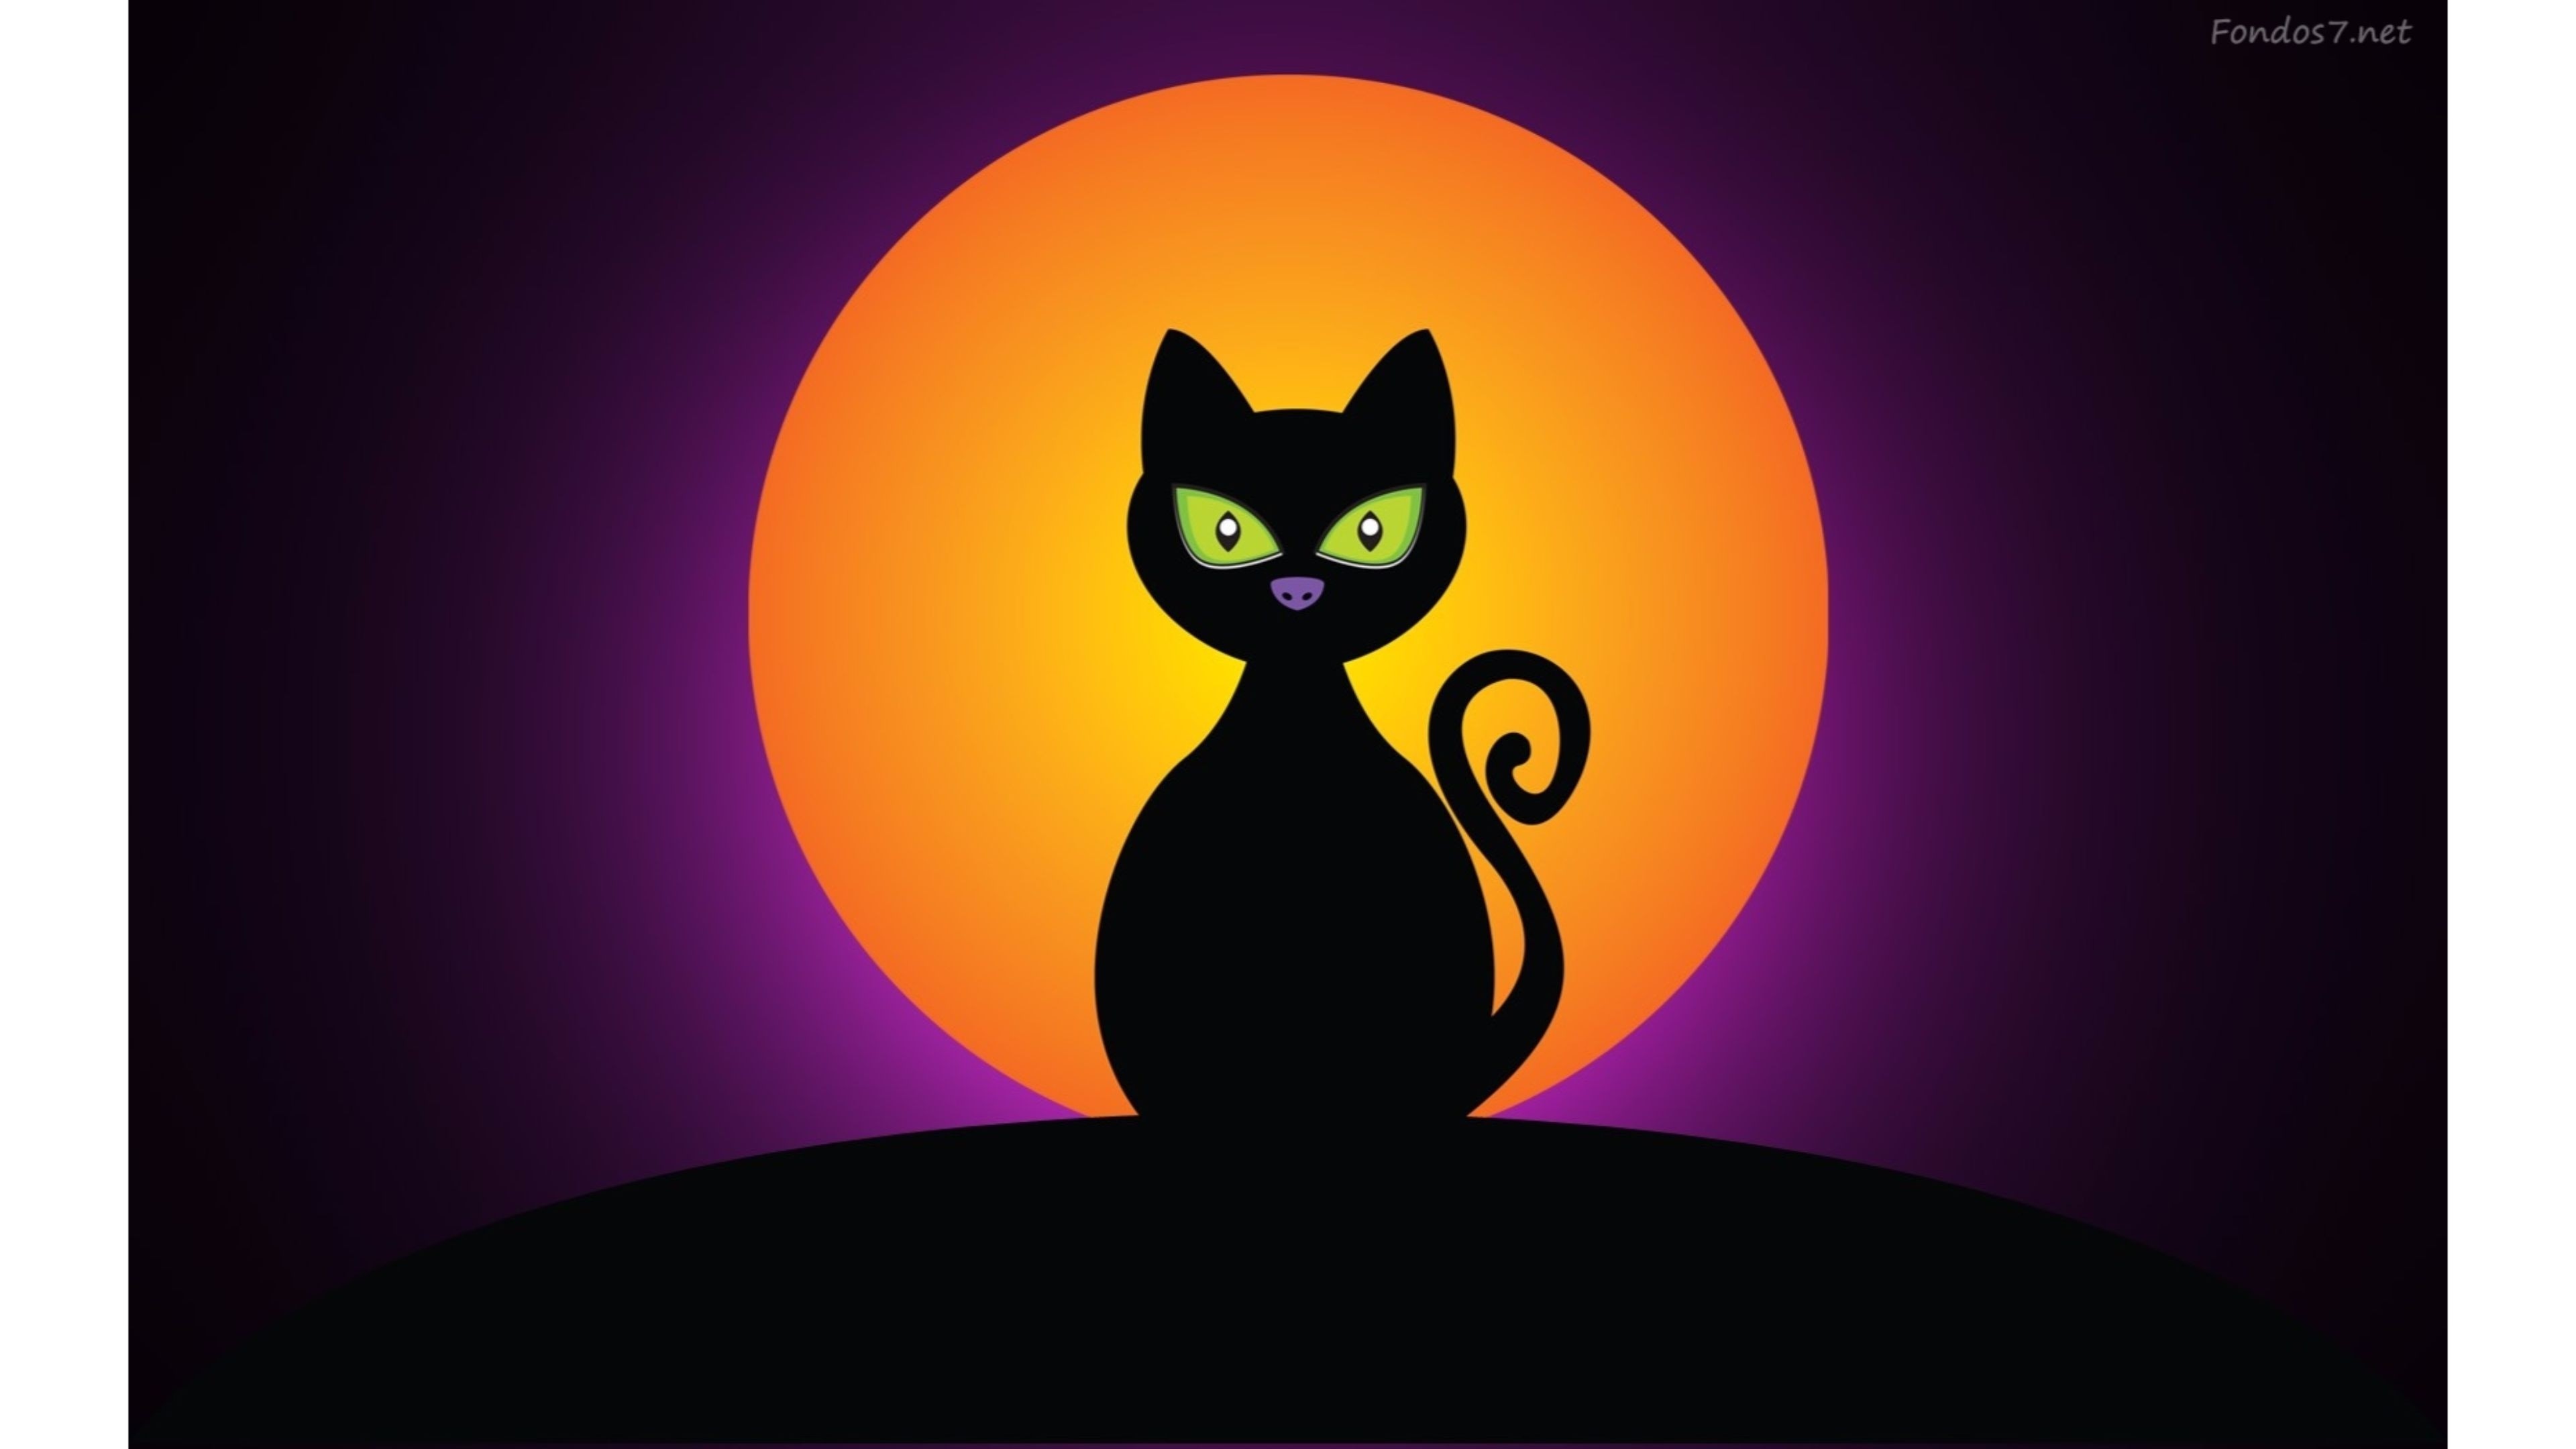 3840x2160 Title : black cat at night happy halloween 4k wallpapers | free 4k wallpaper.  Dimension : 3840 x 2160. File Type : JPG/JPEG